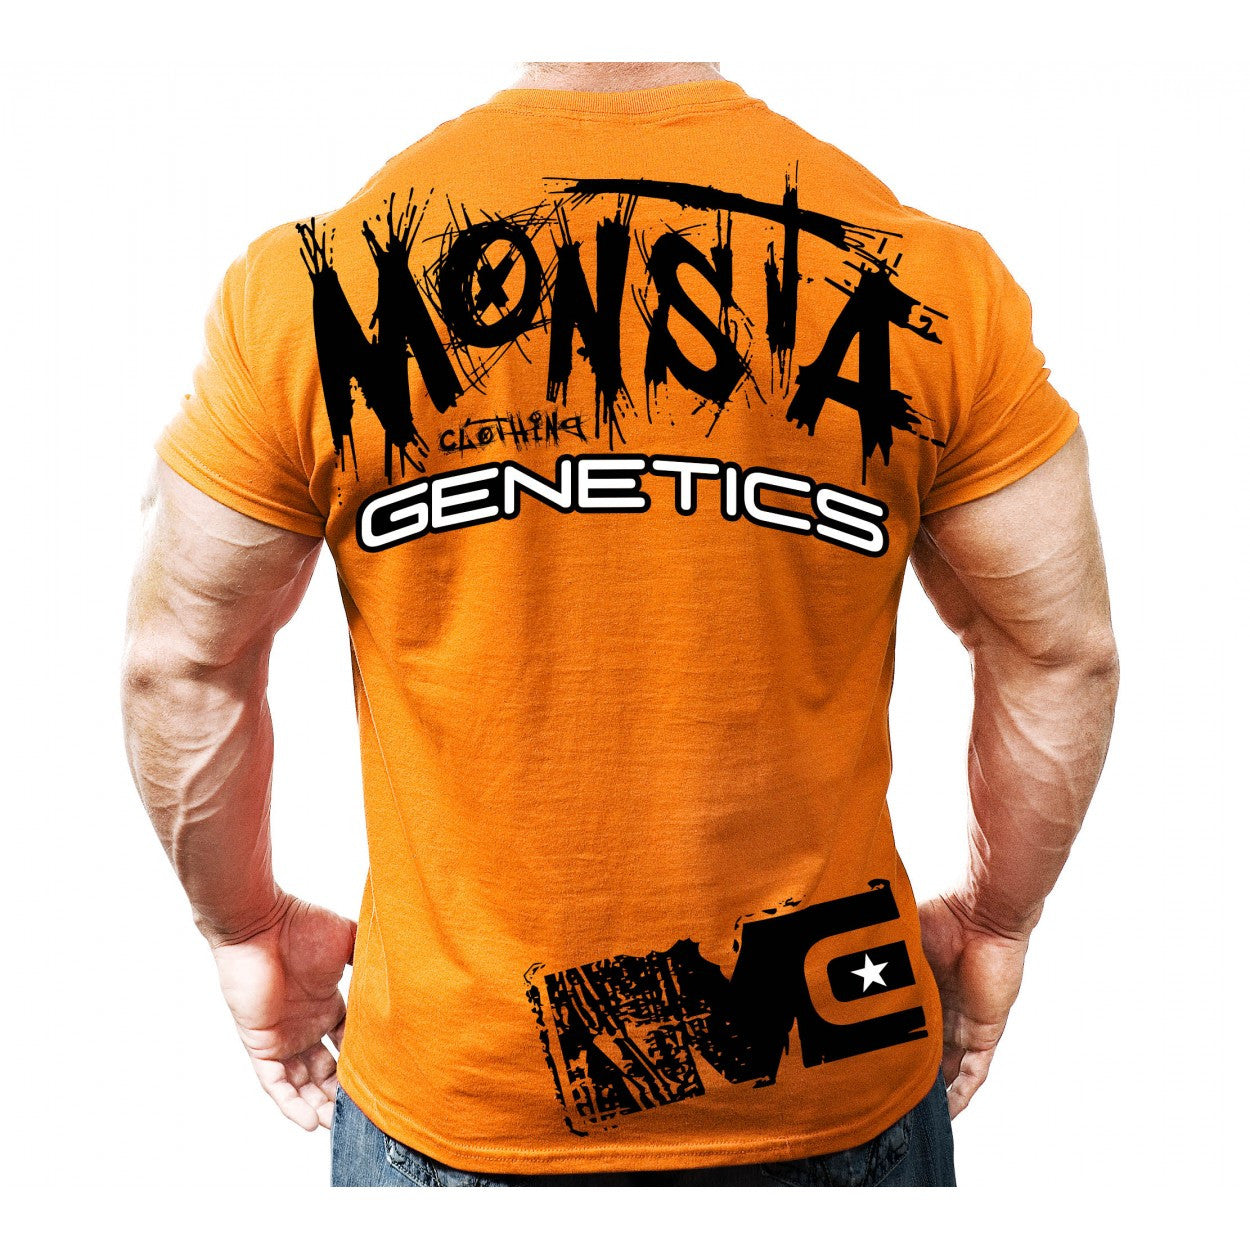 Tee: Monsta Genetics - Monsta Clothing Australia